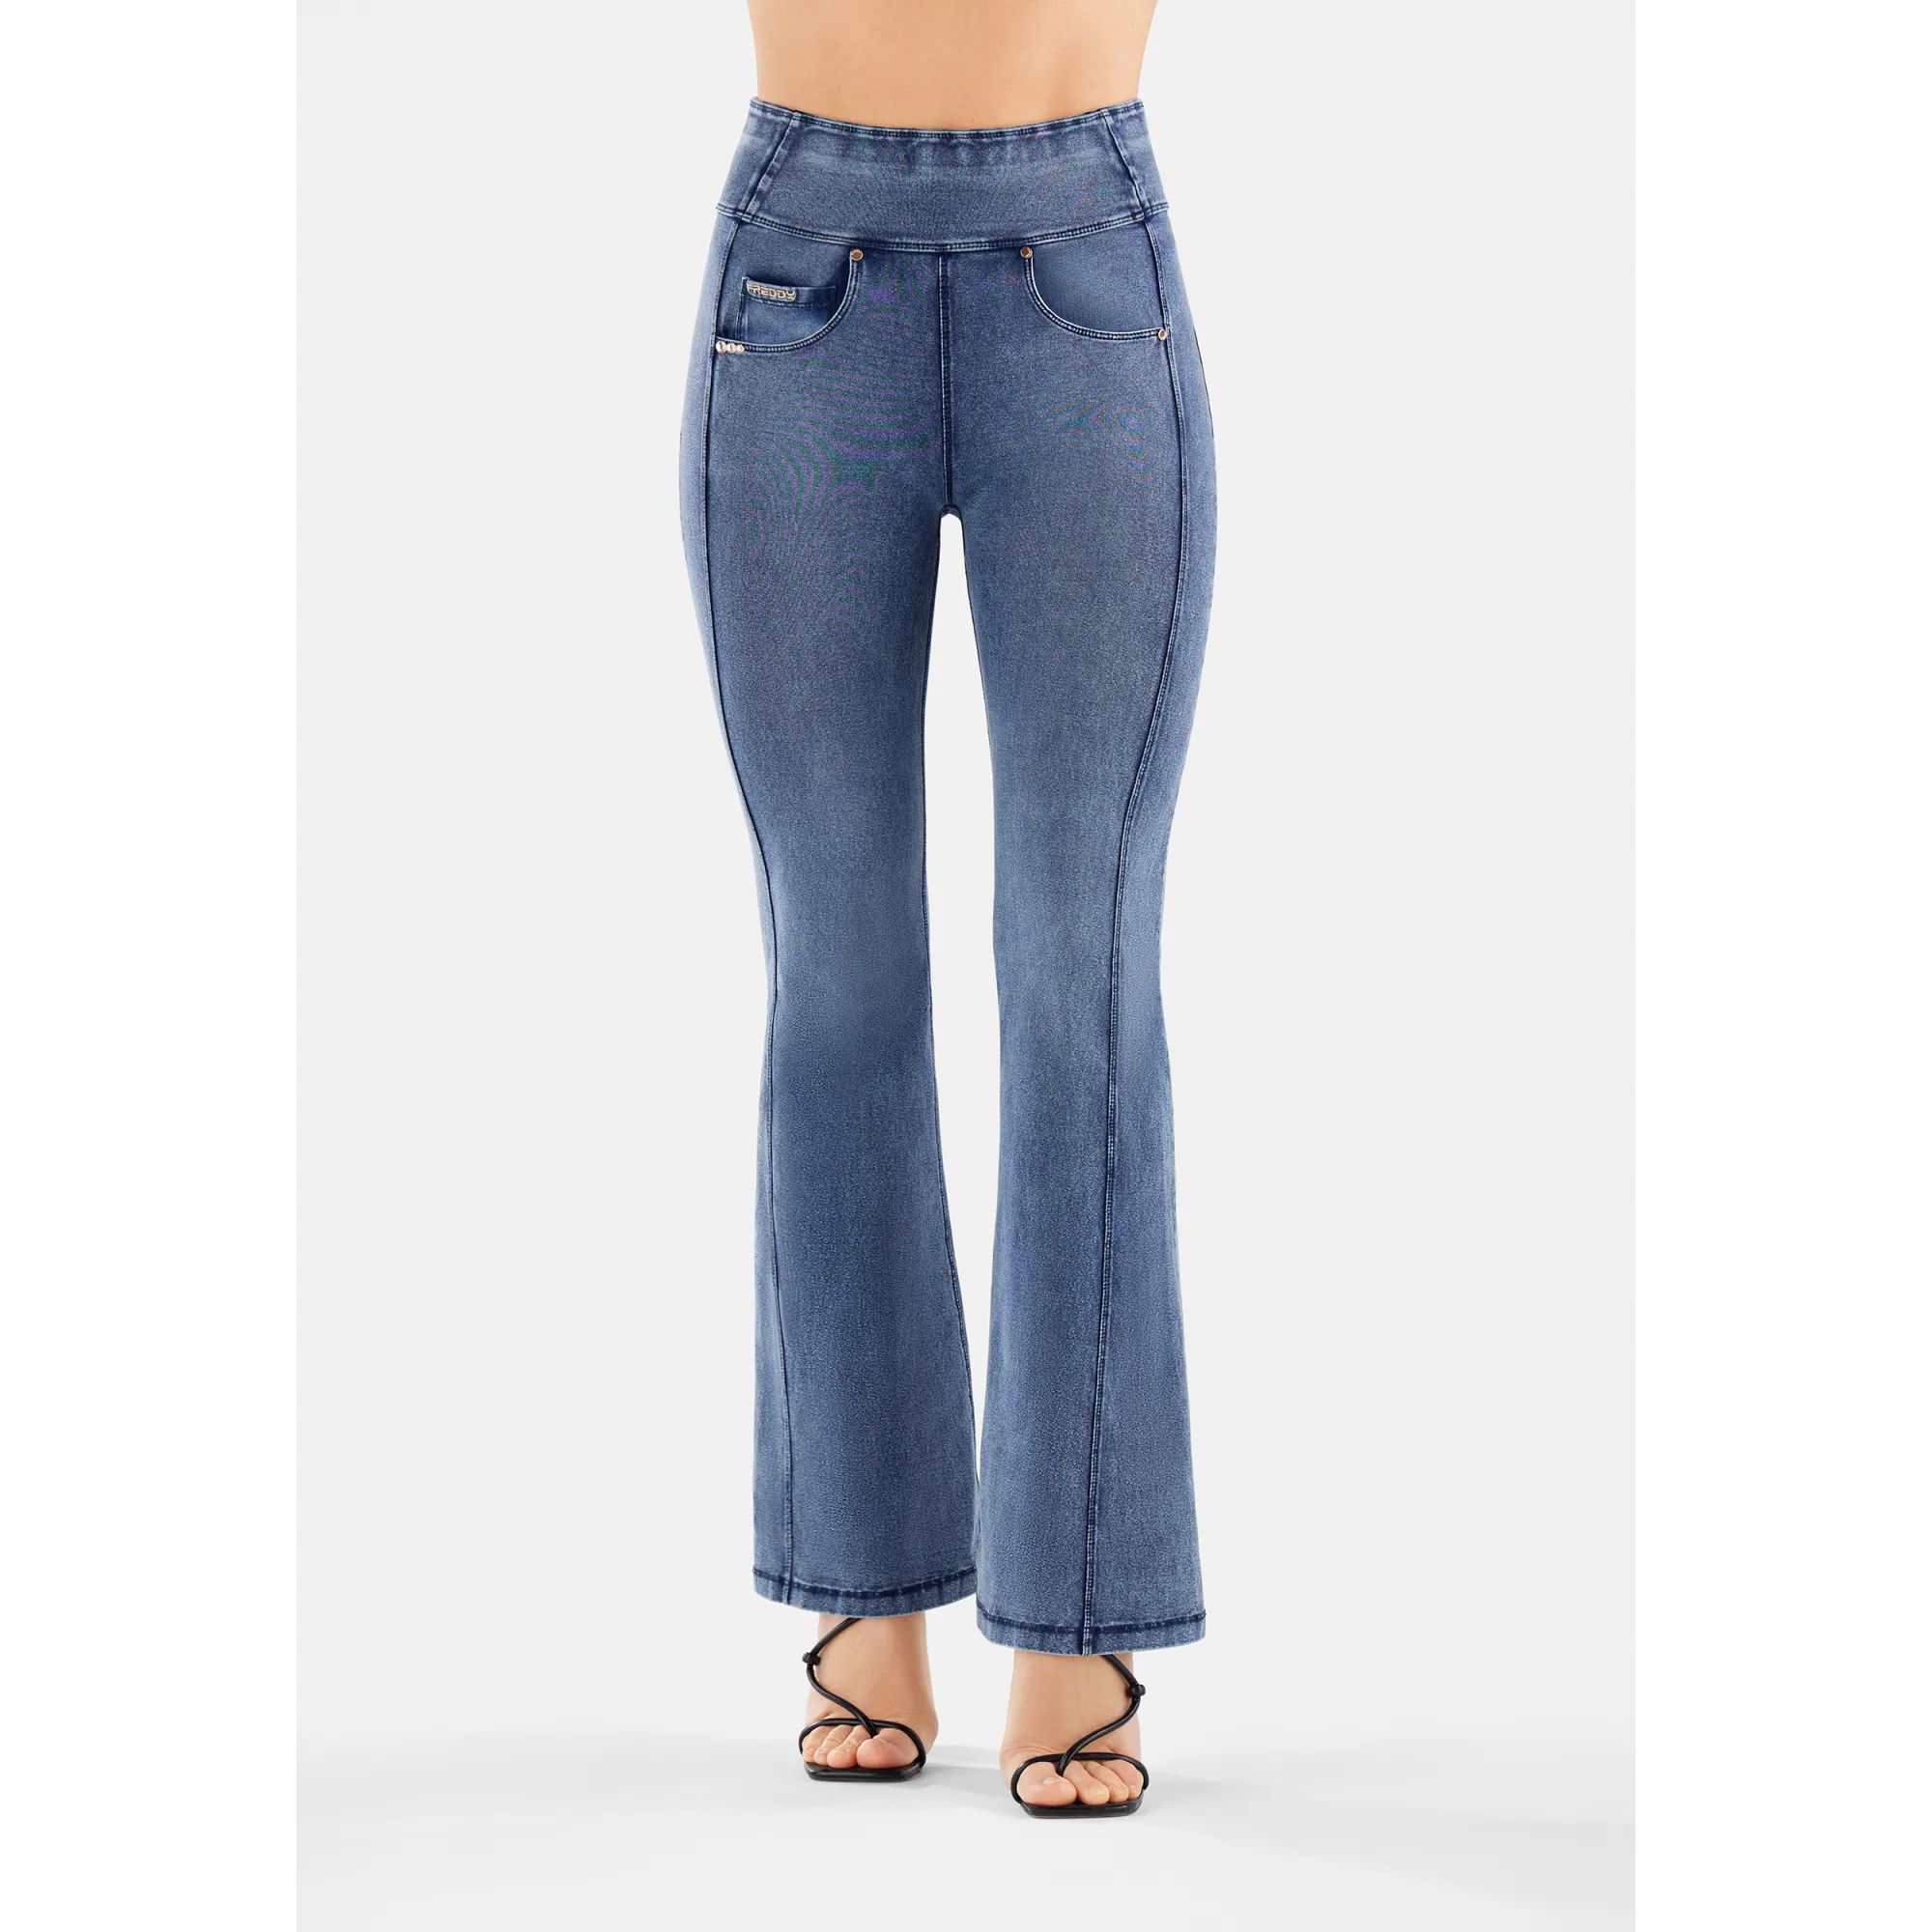 Freddy N.O.W.® Yoga Damen Comfort Jeans - High Waist Flare - Blau - Blaue Nähte - J109B